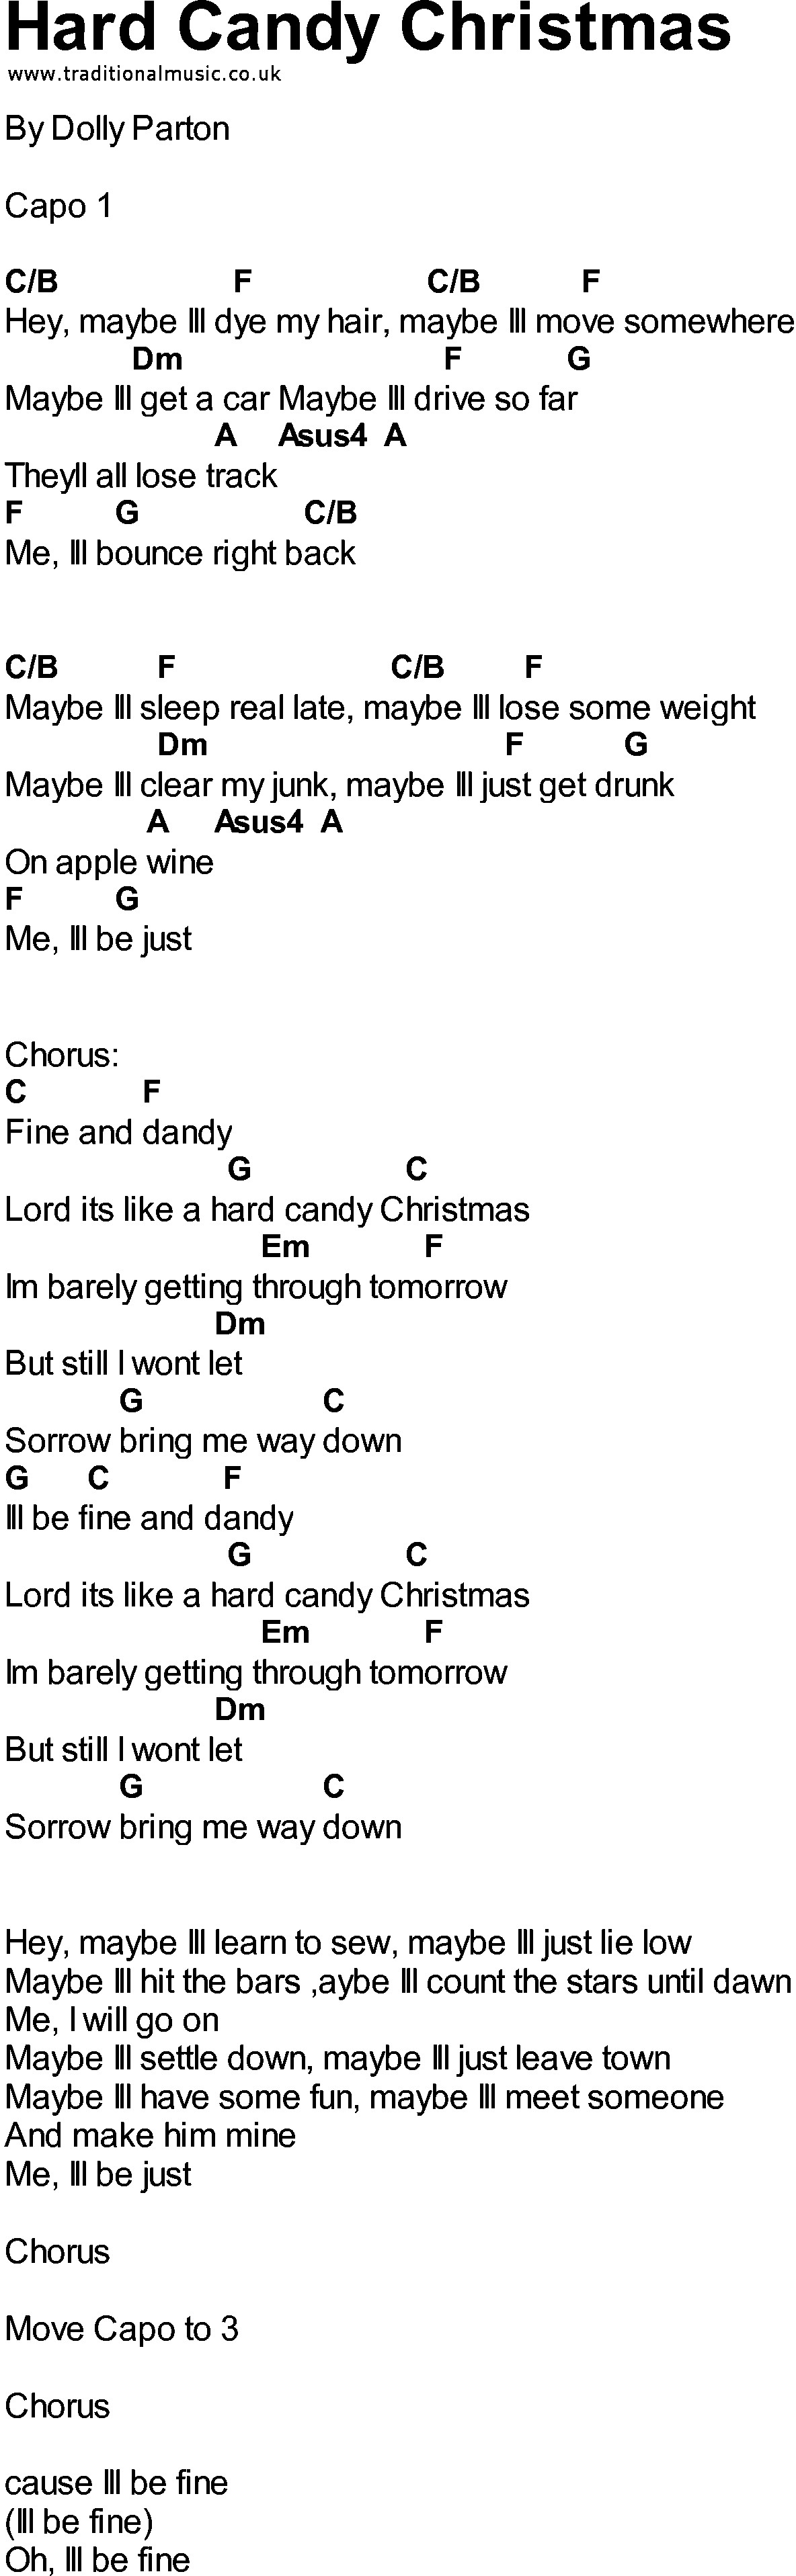 Hard Candy Christmas Lyrics
 Bluegrass songs with chords Hard Candy Christmas